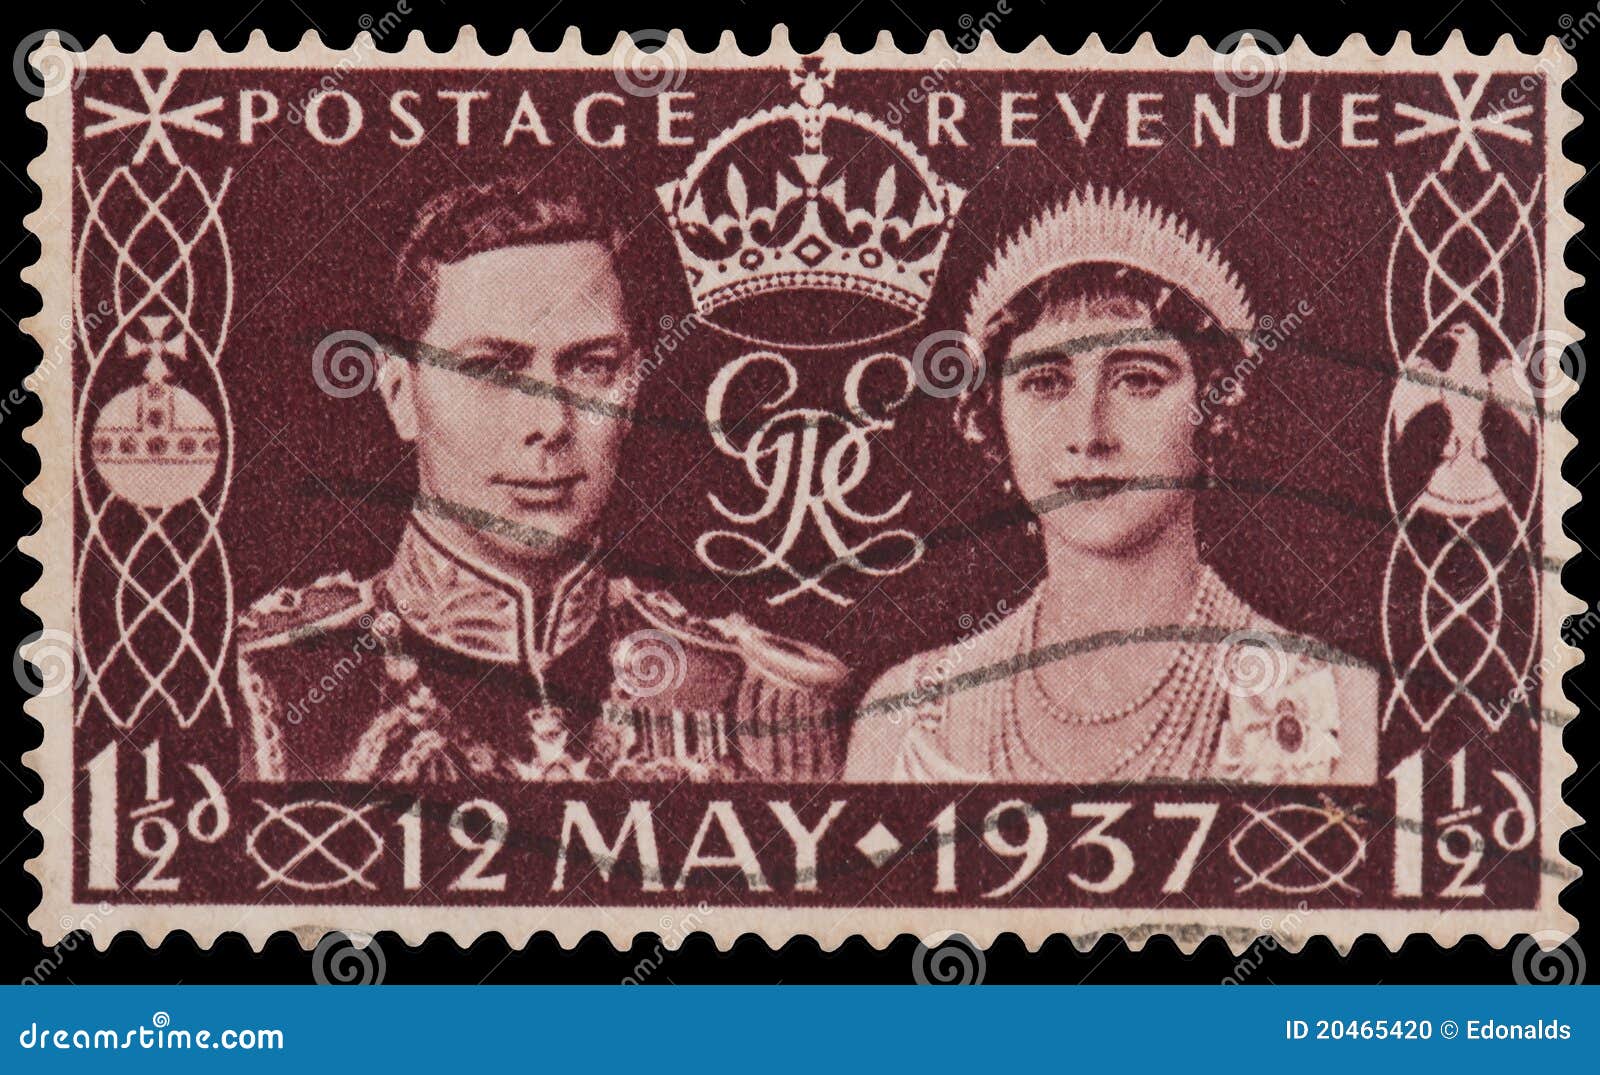 King George VI Coronation Stamp Stock Photo - Image: 20465420